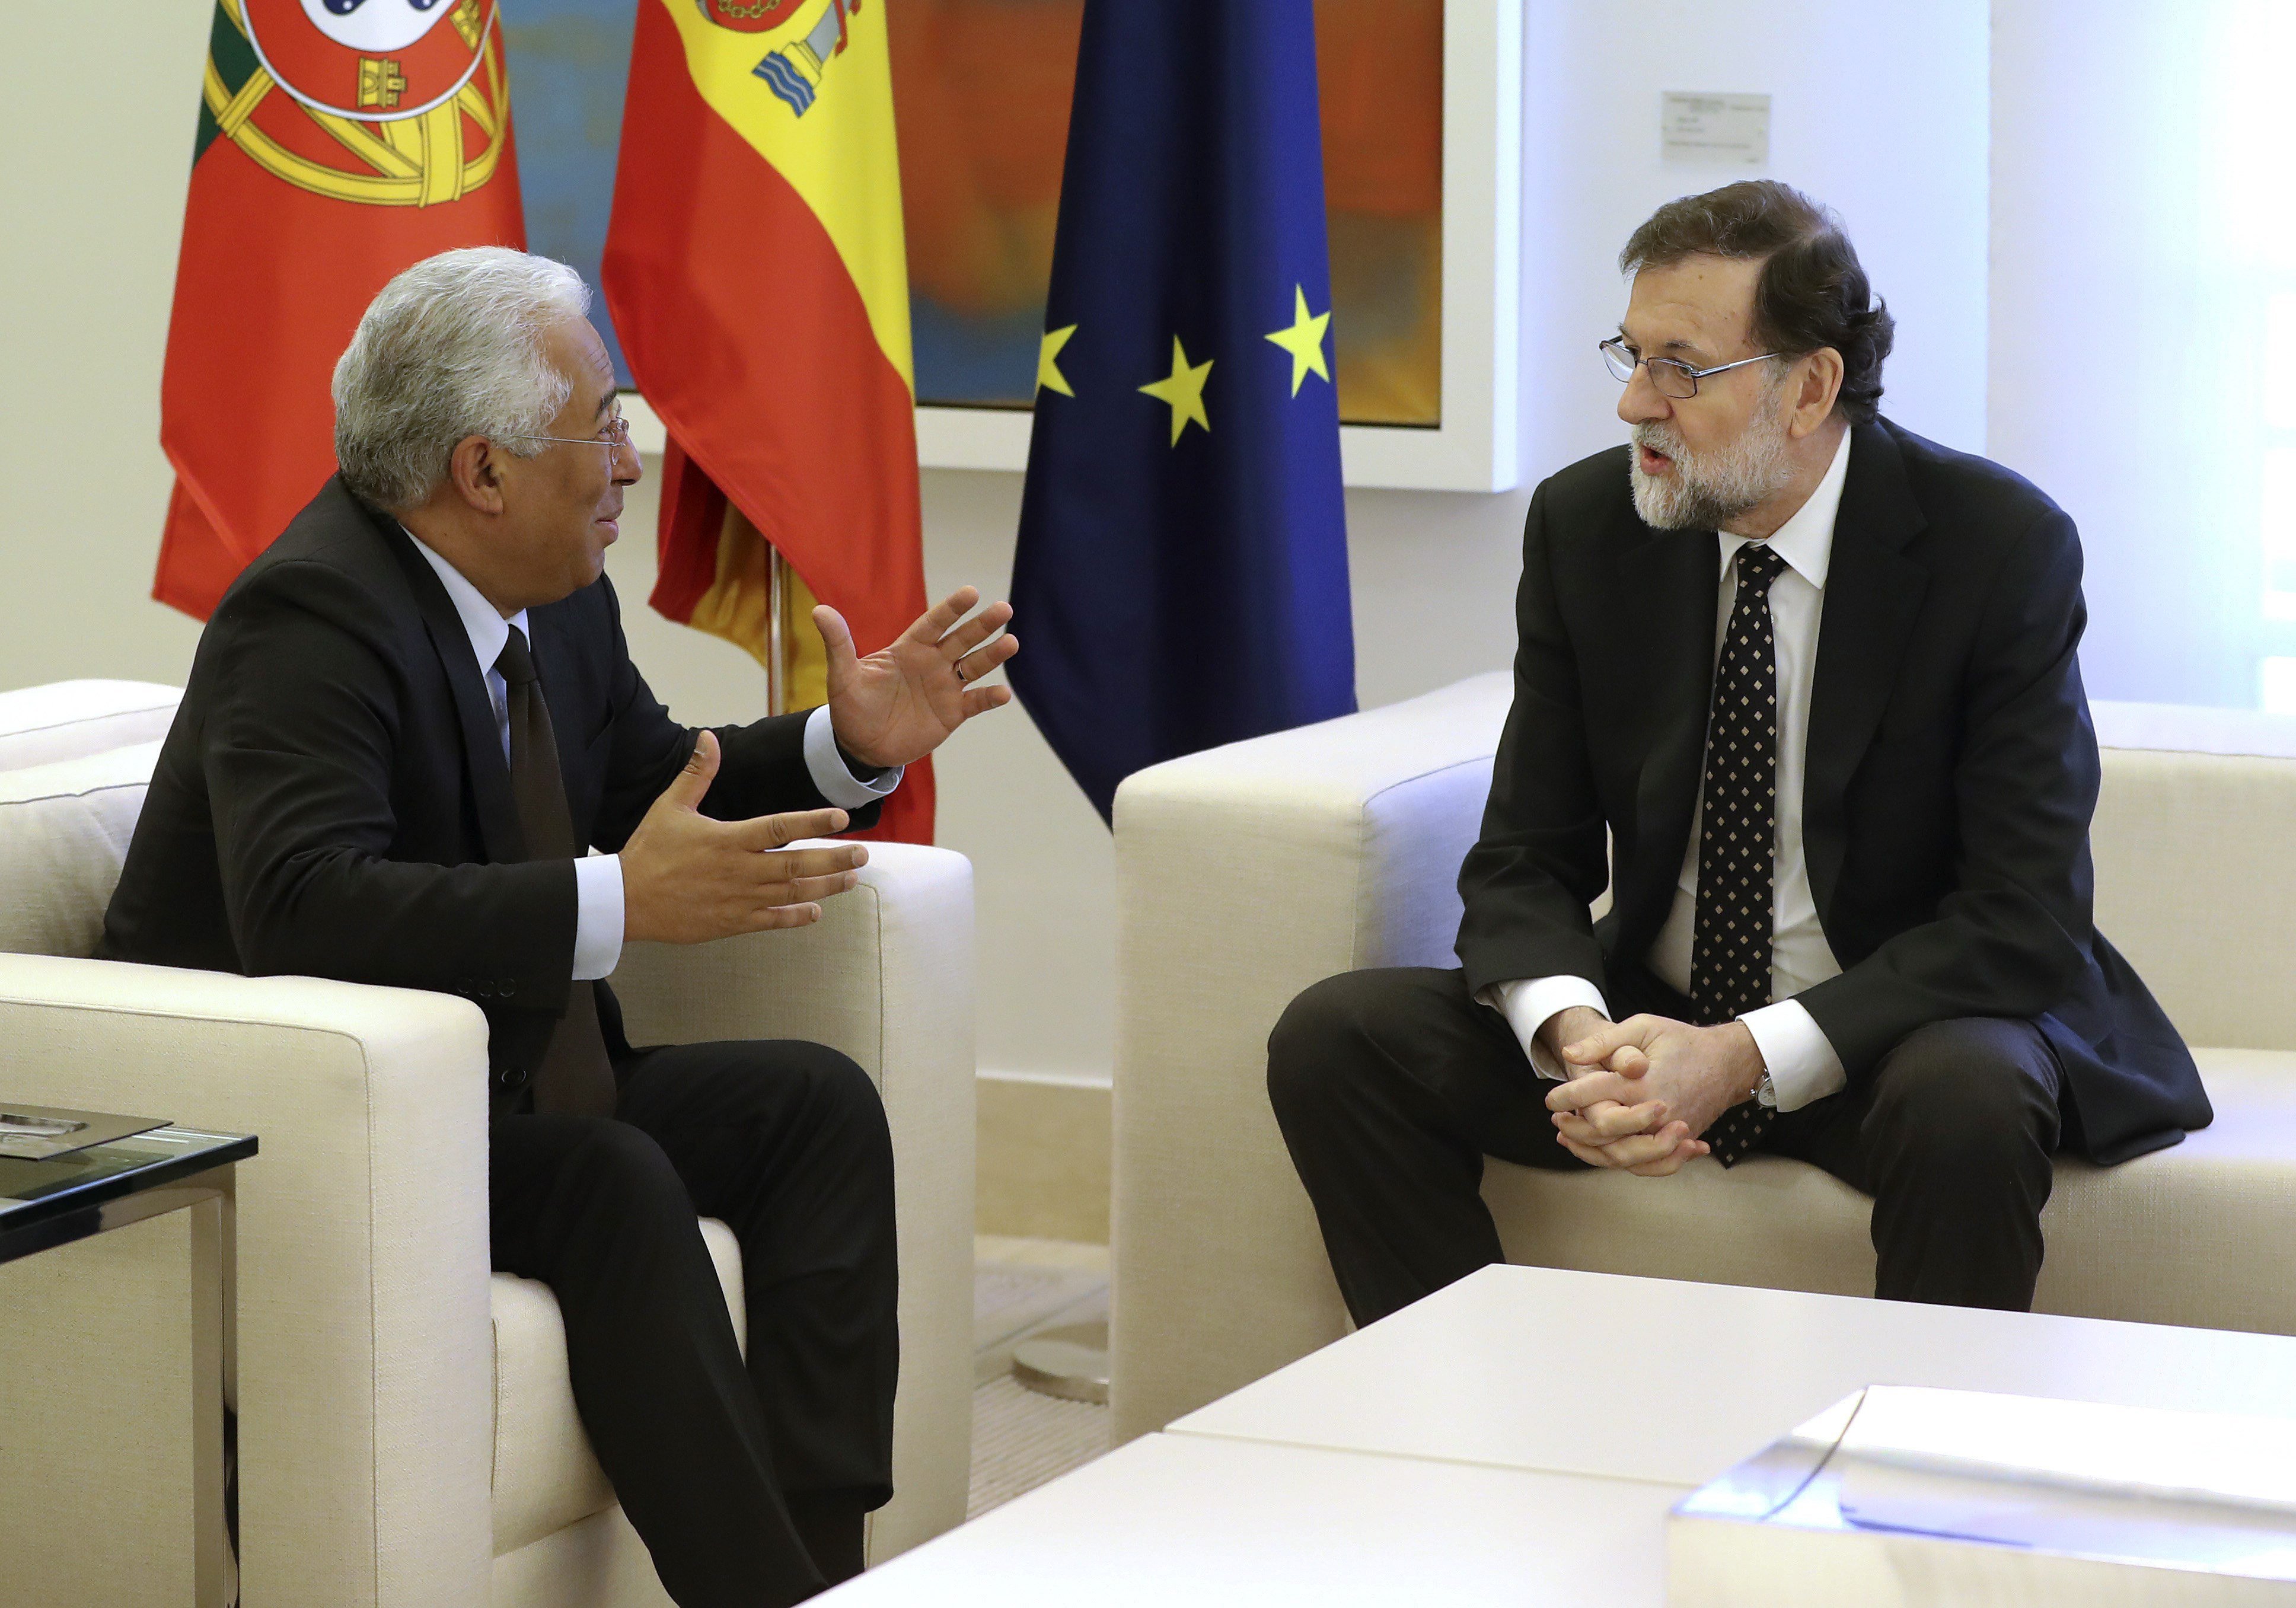 António Costa reitera a Rajoy apoio de Portugal a candidatura de Luis de Guindos ao BCE